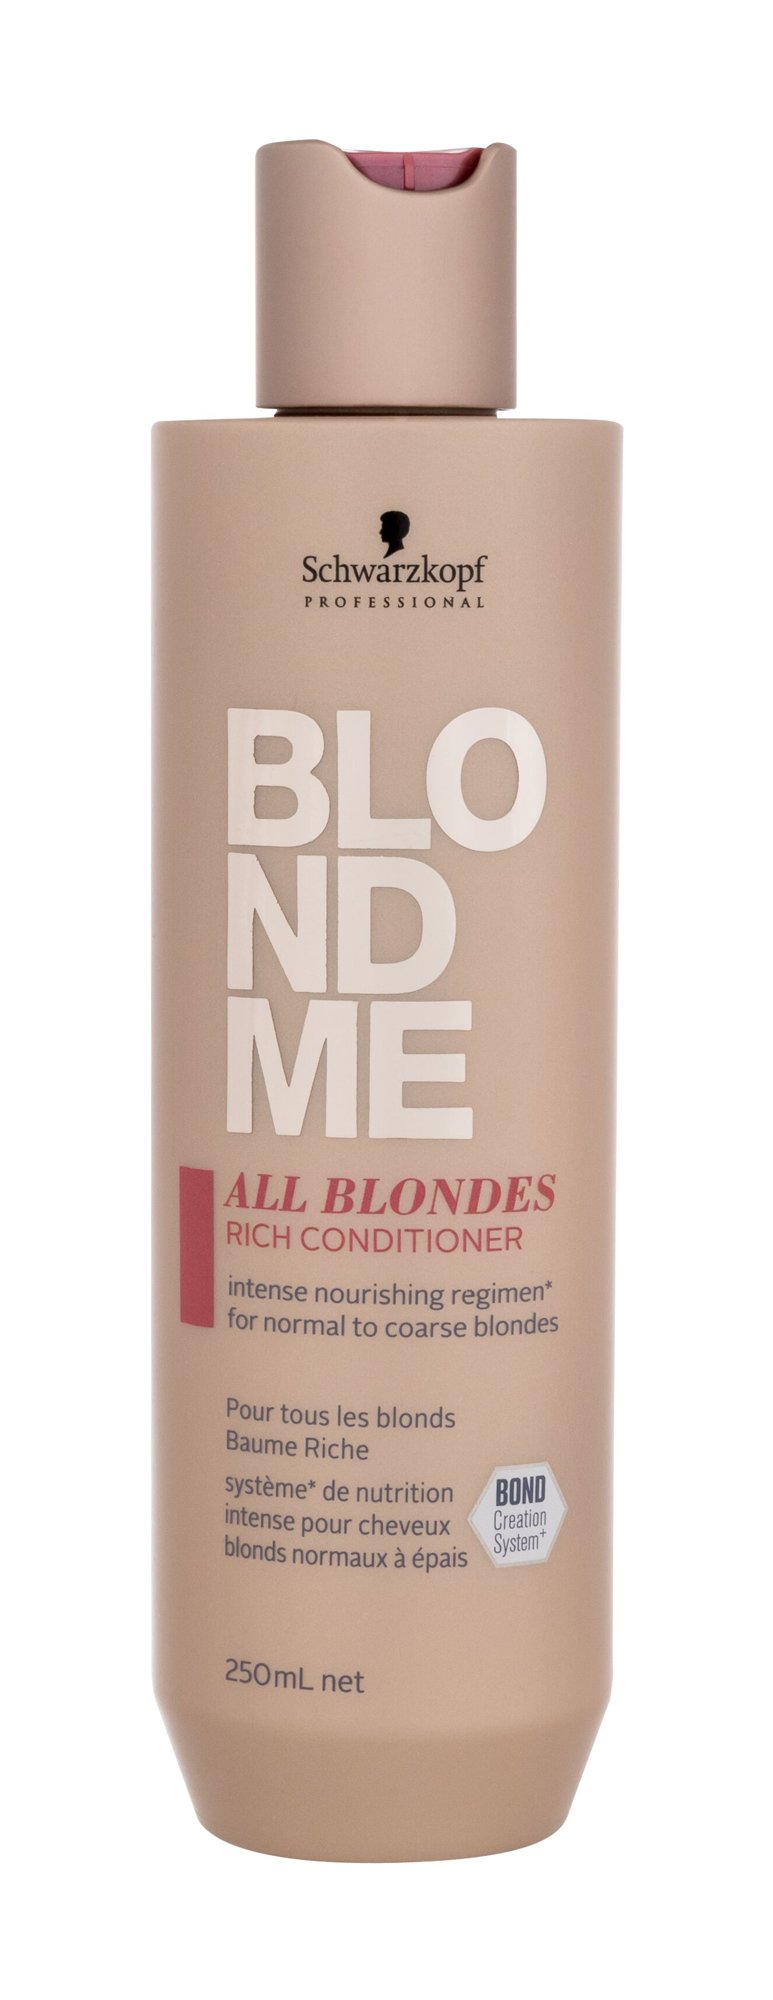 Schwarzkopf Professional Blond Me All Blondes kondicionierius